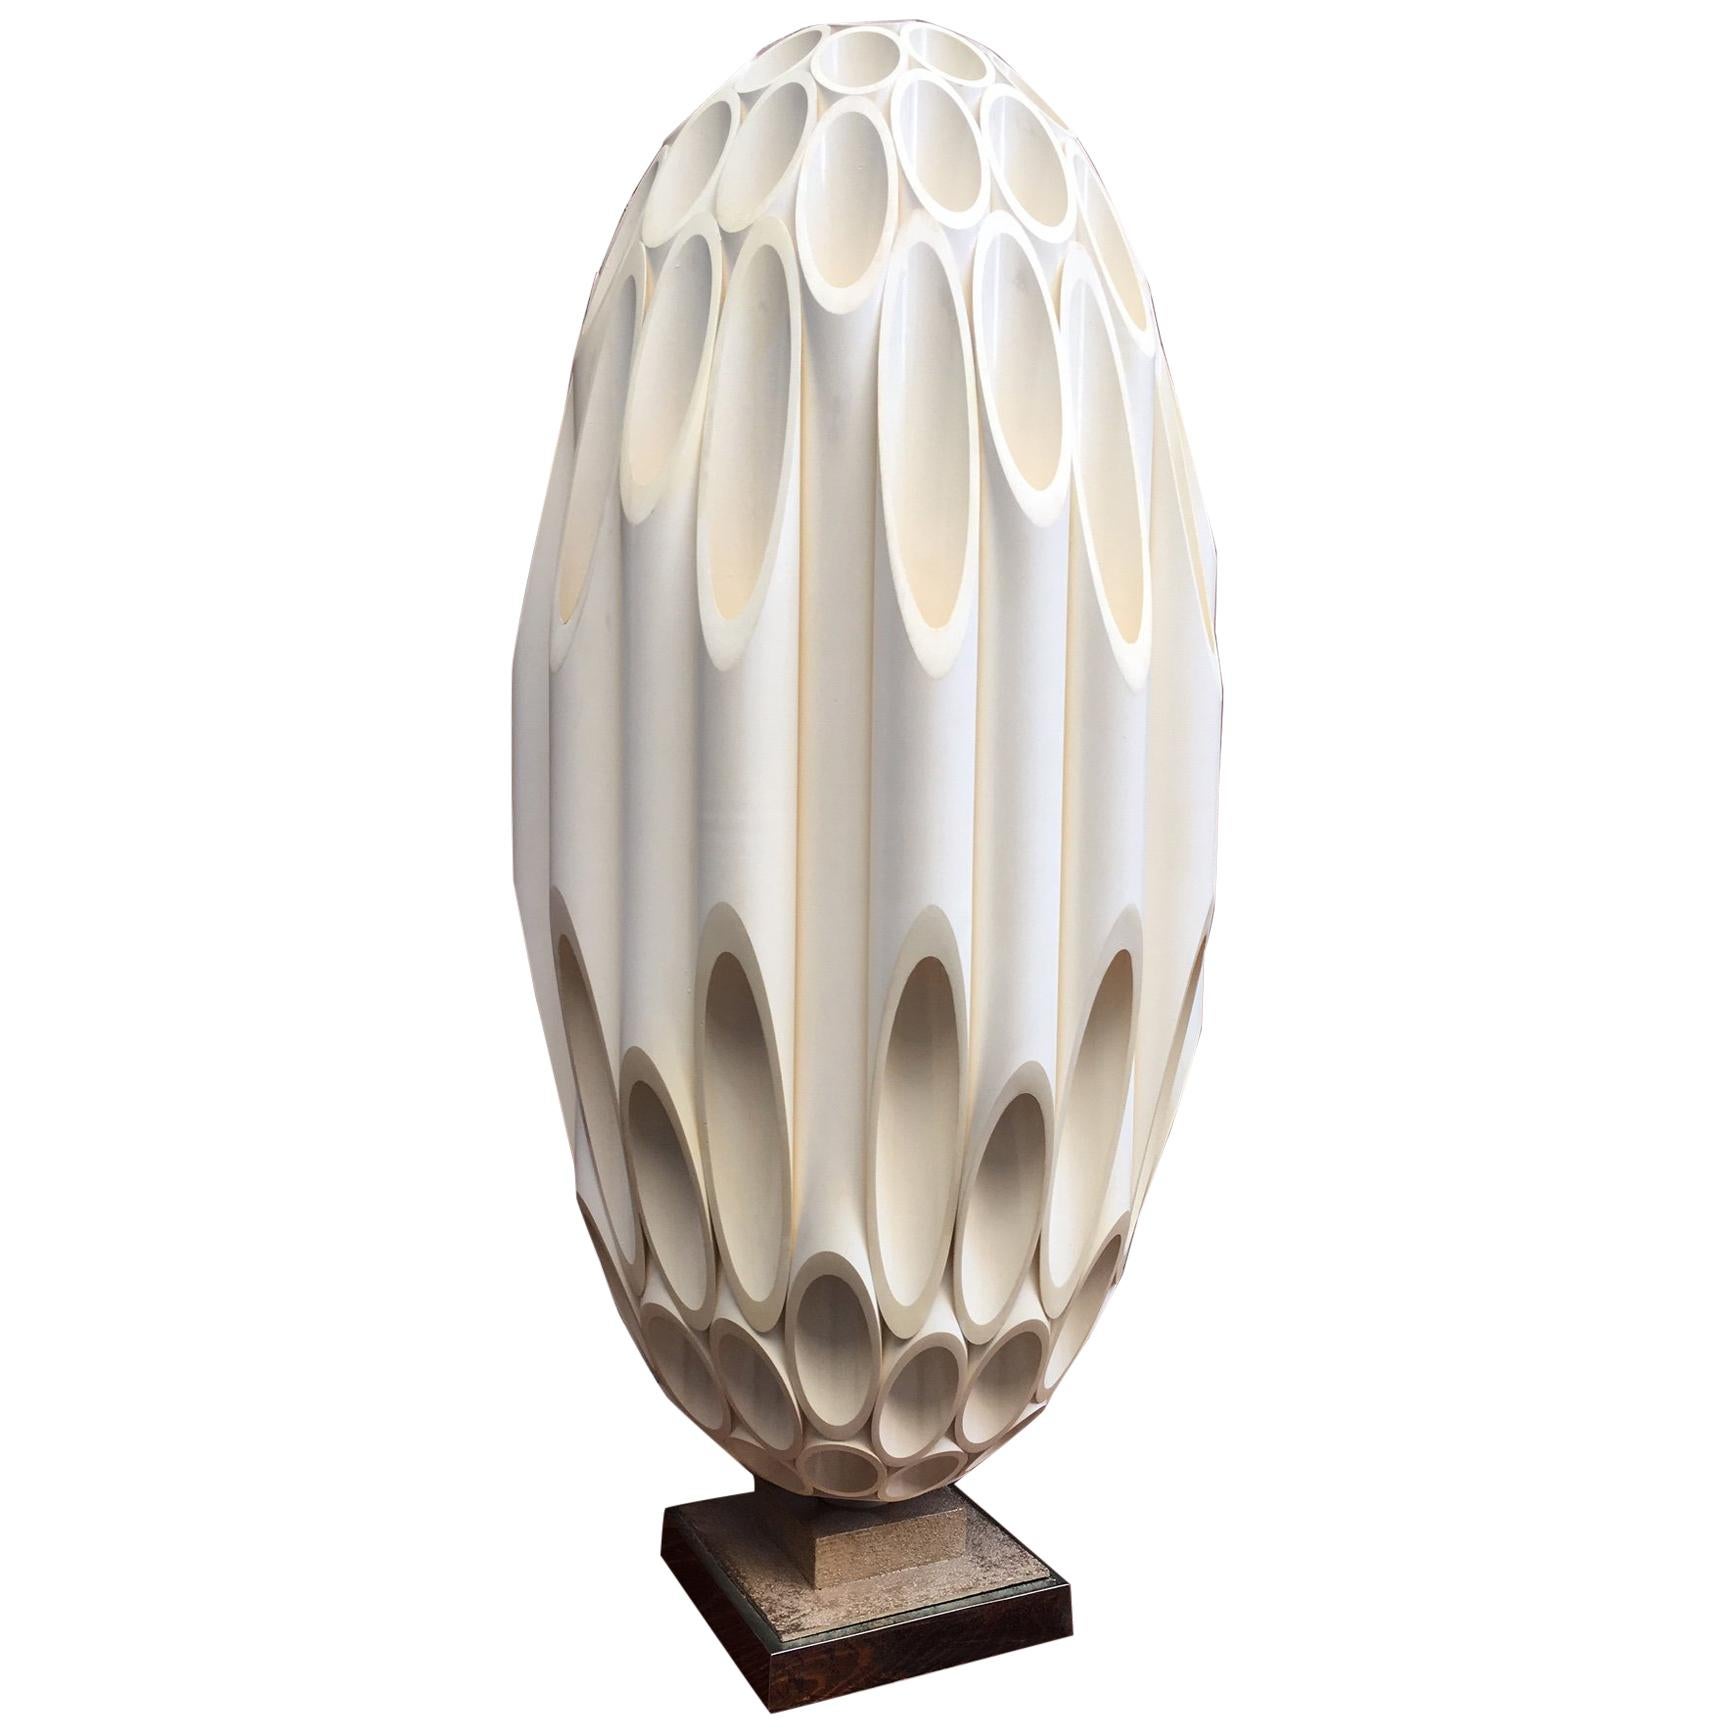 Roger Rougier Sculptural Post Modern Lamp